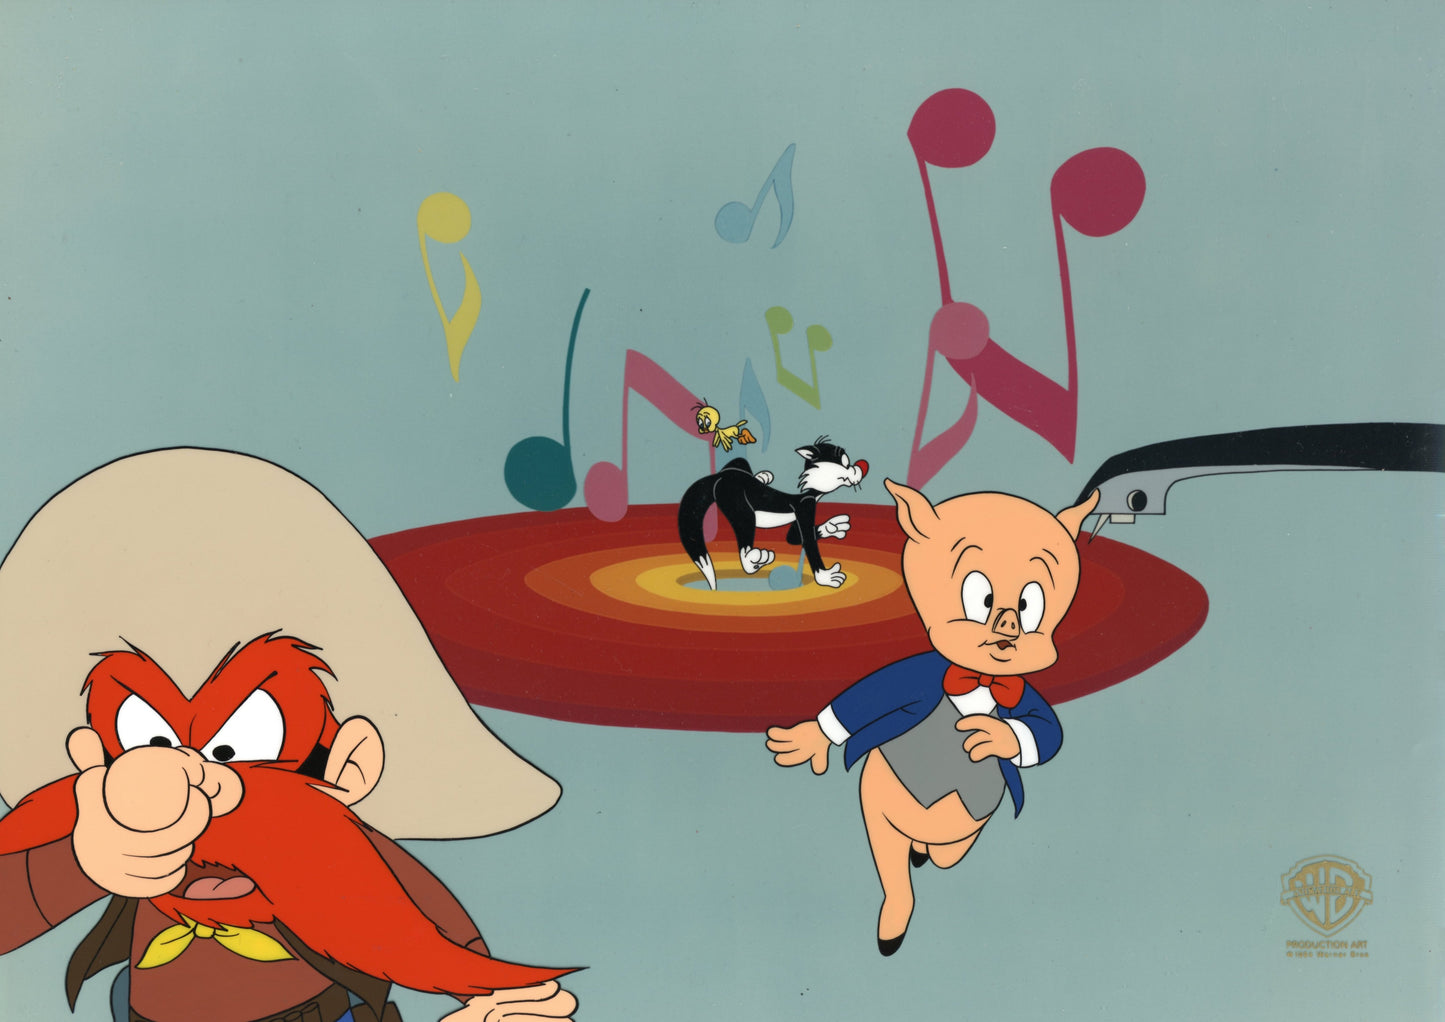 Looney Tunes Original Production Cel: Yosemite Sam, Porky Pig, Sylvester, Tweety